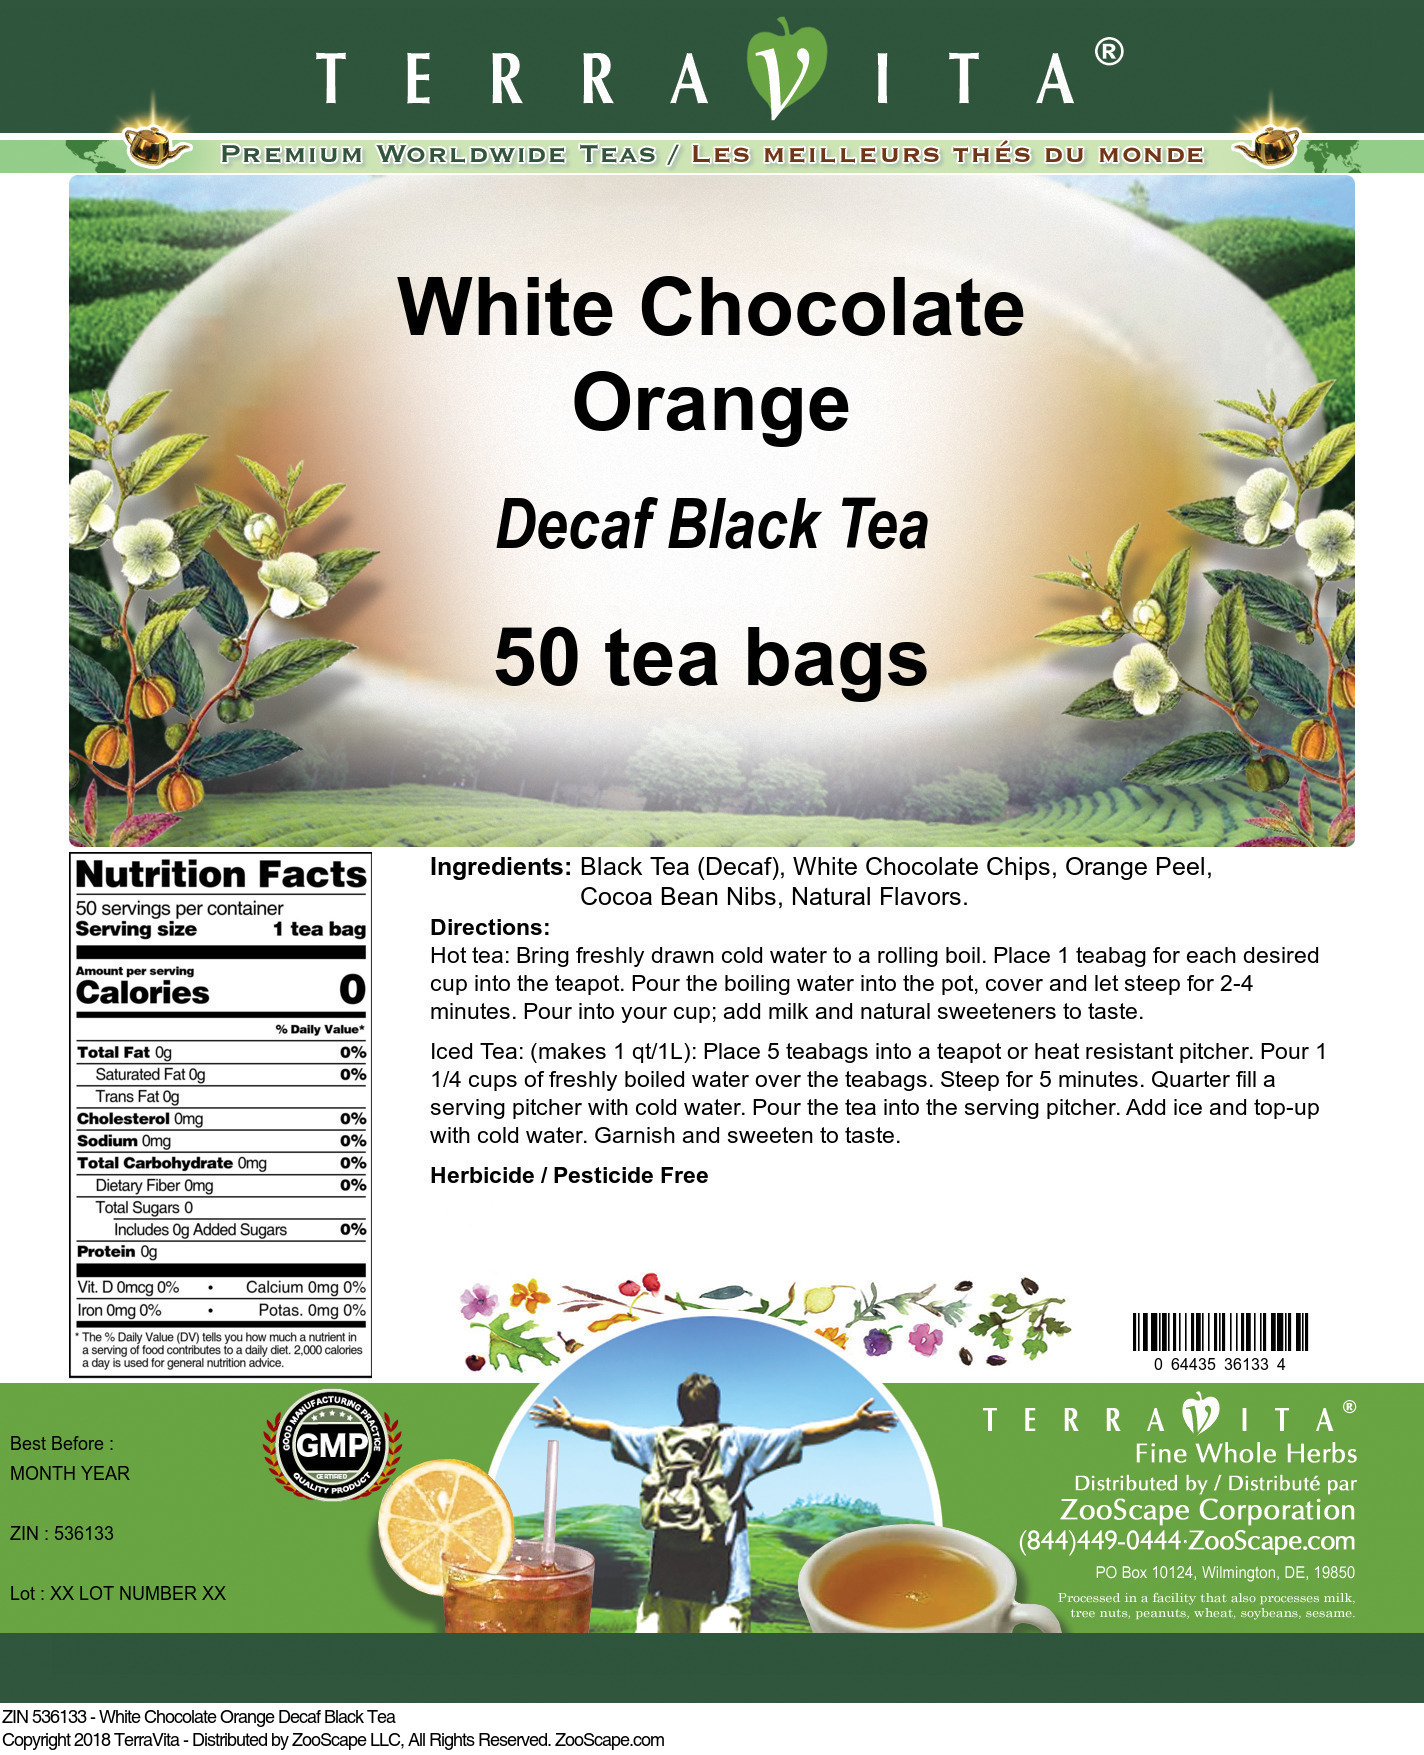 White Chocolate Orange Decaf Black Tea - Label